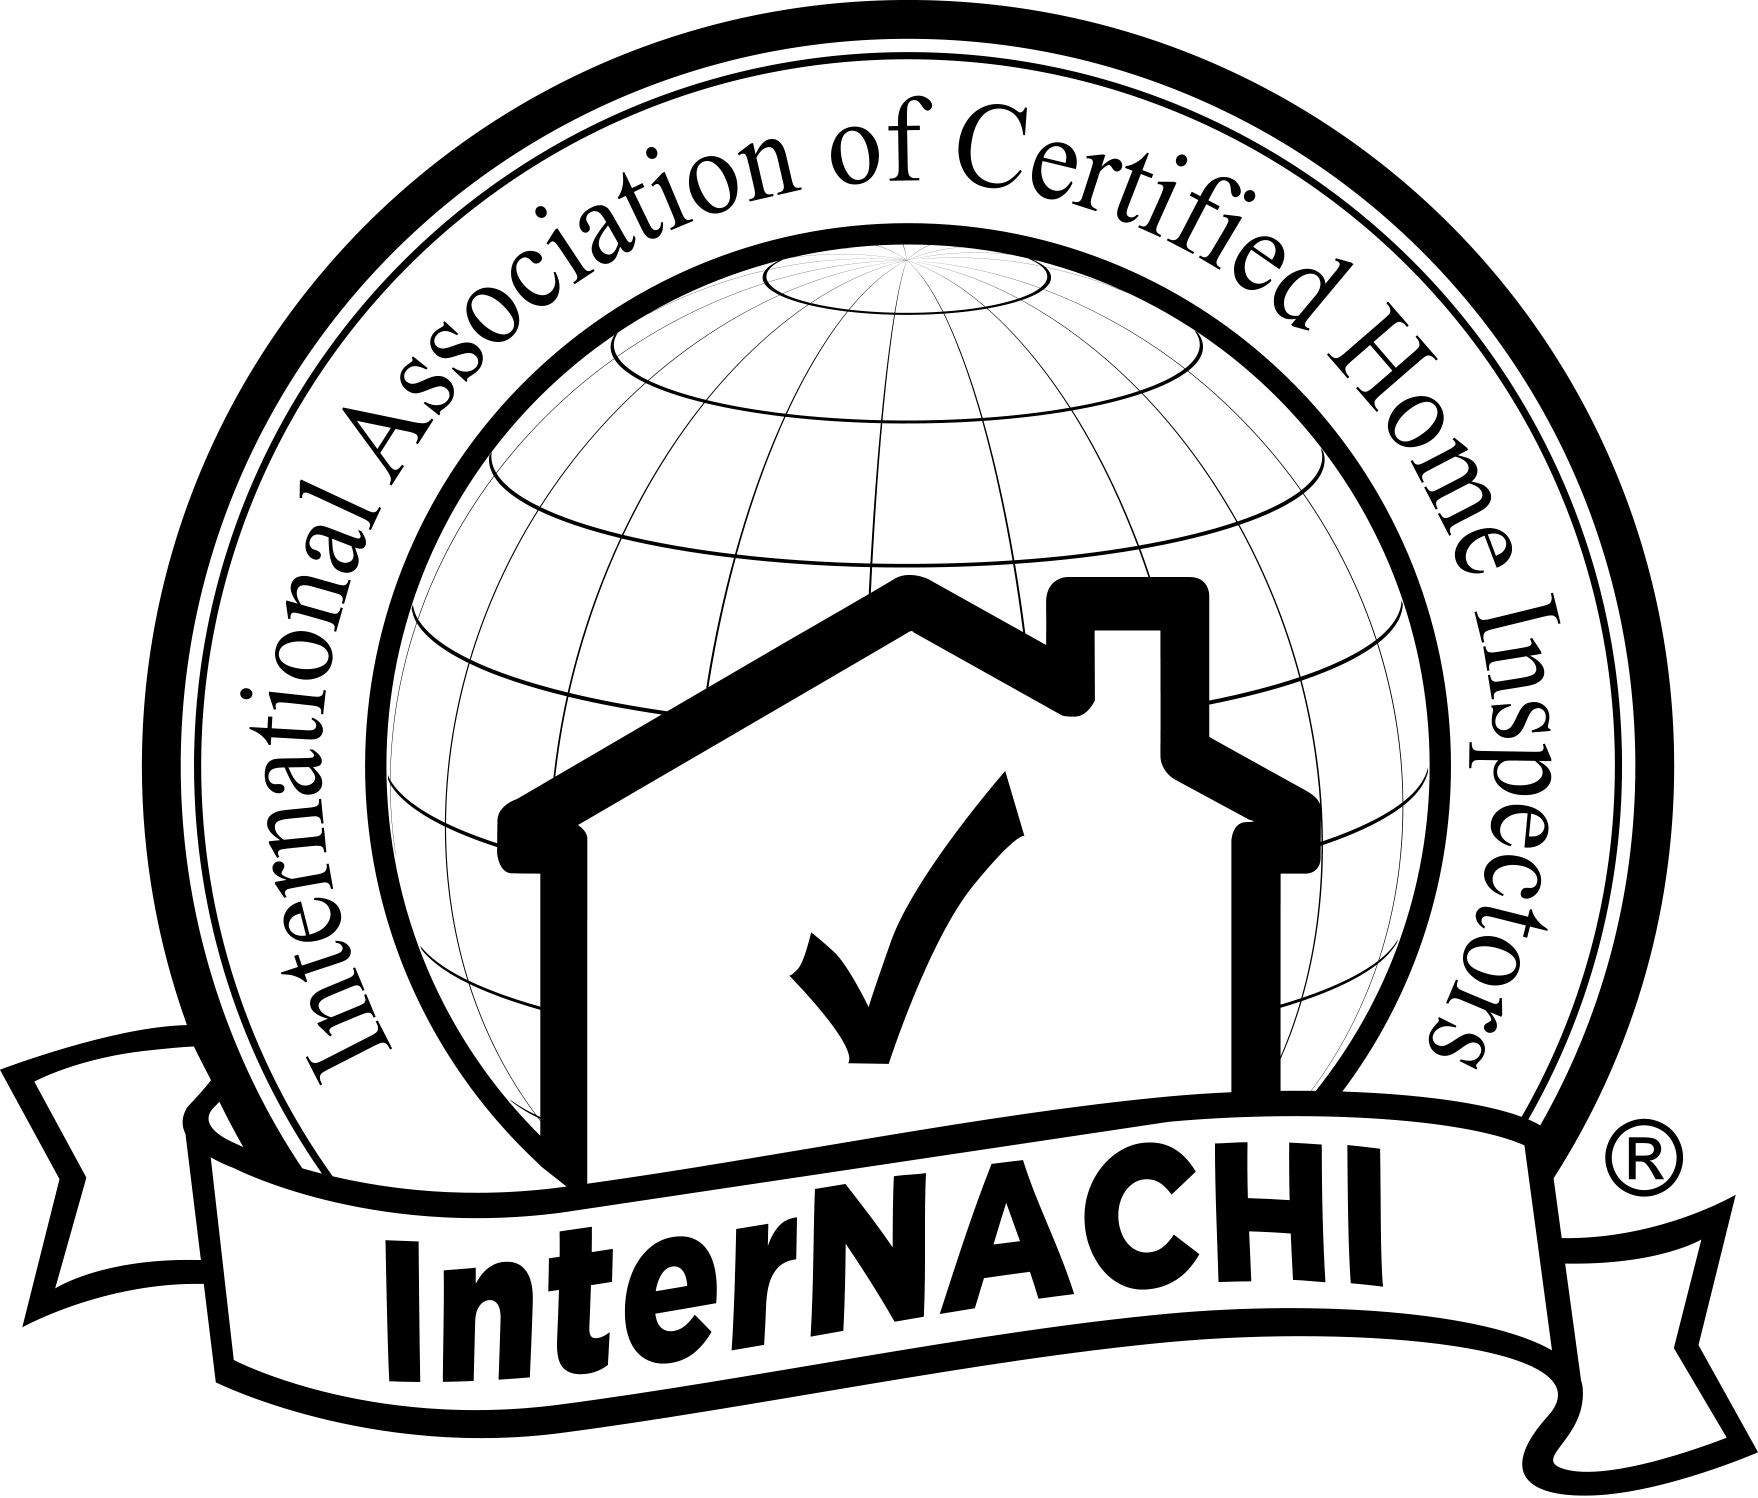 http://www.nachi.org/documents/logos/internachi/internachi.jpg